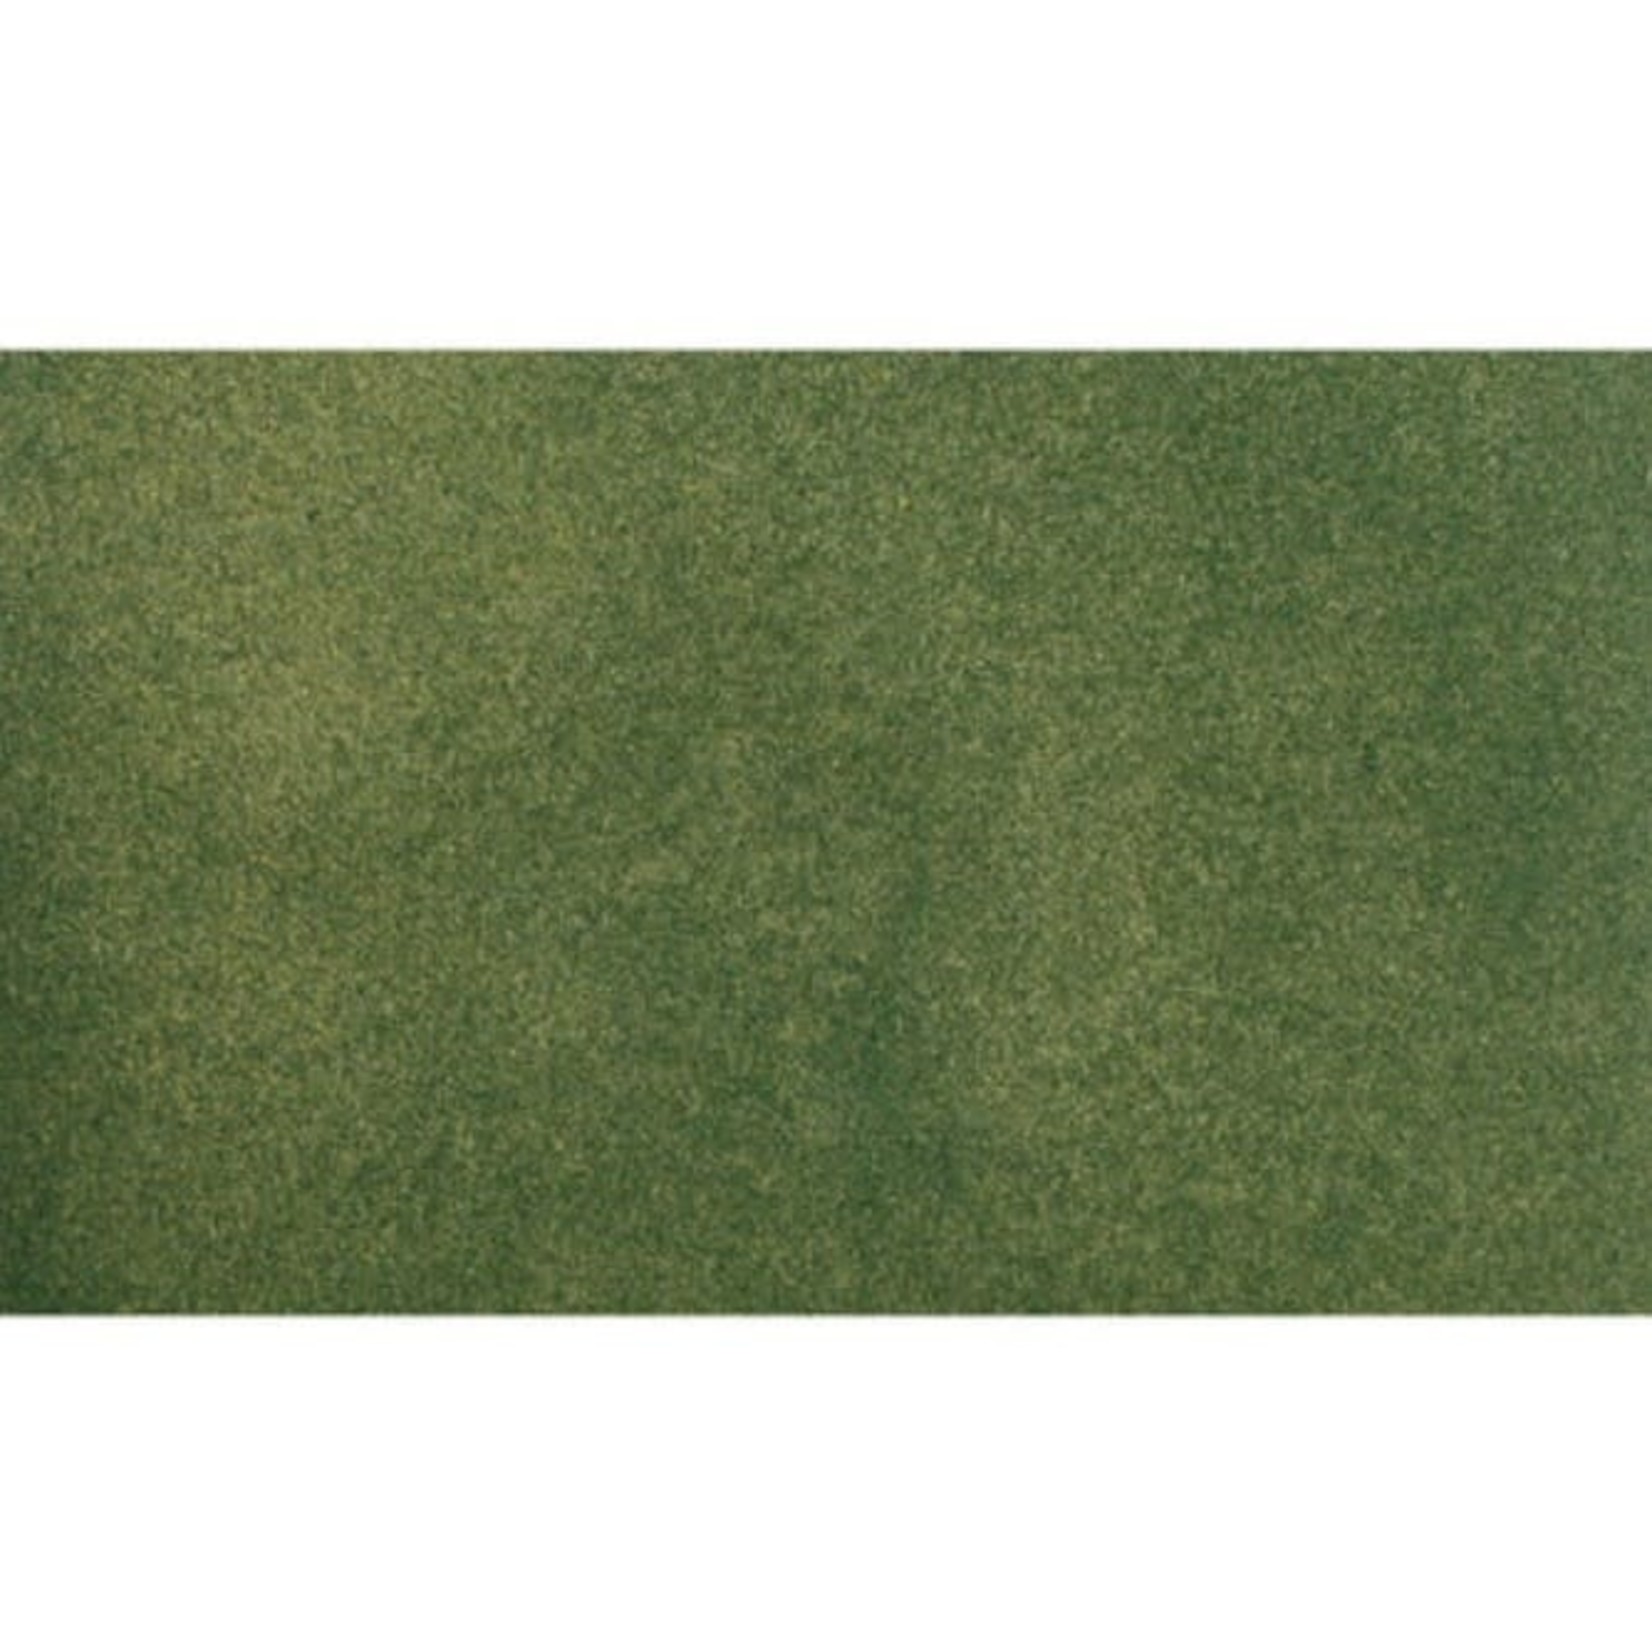 Woodland Scenics Grass Mat, Green 25" x 33"